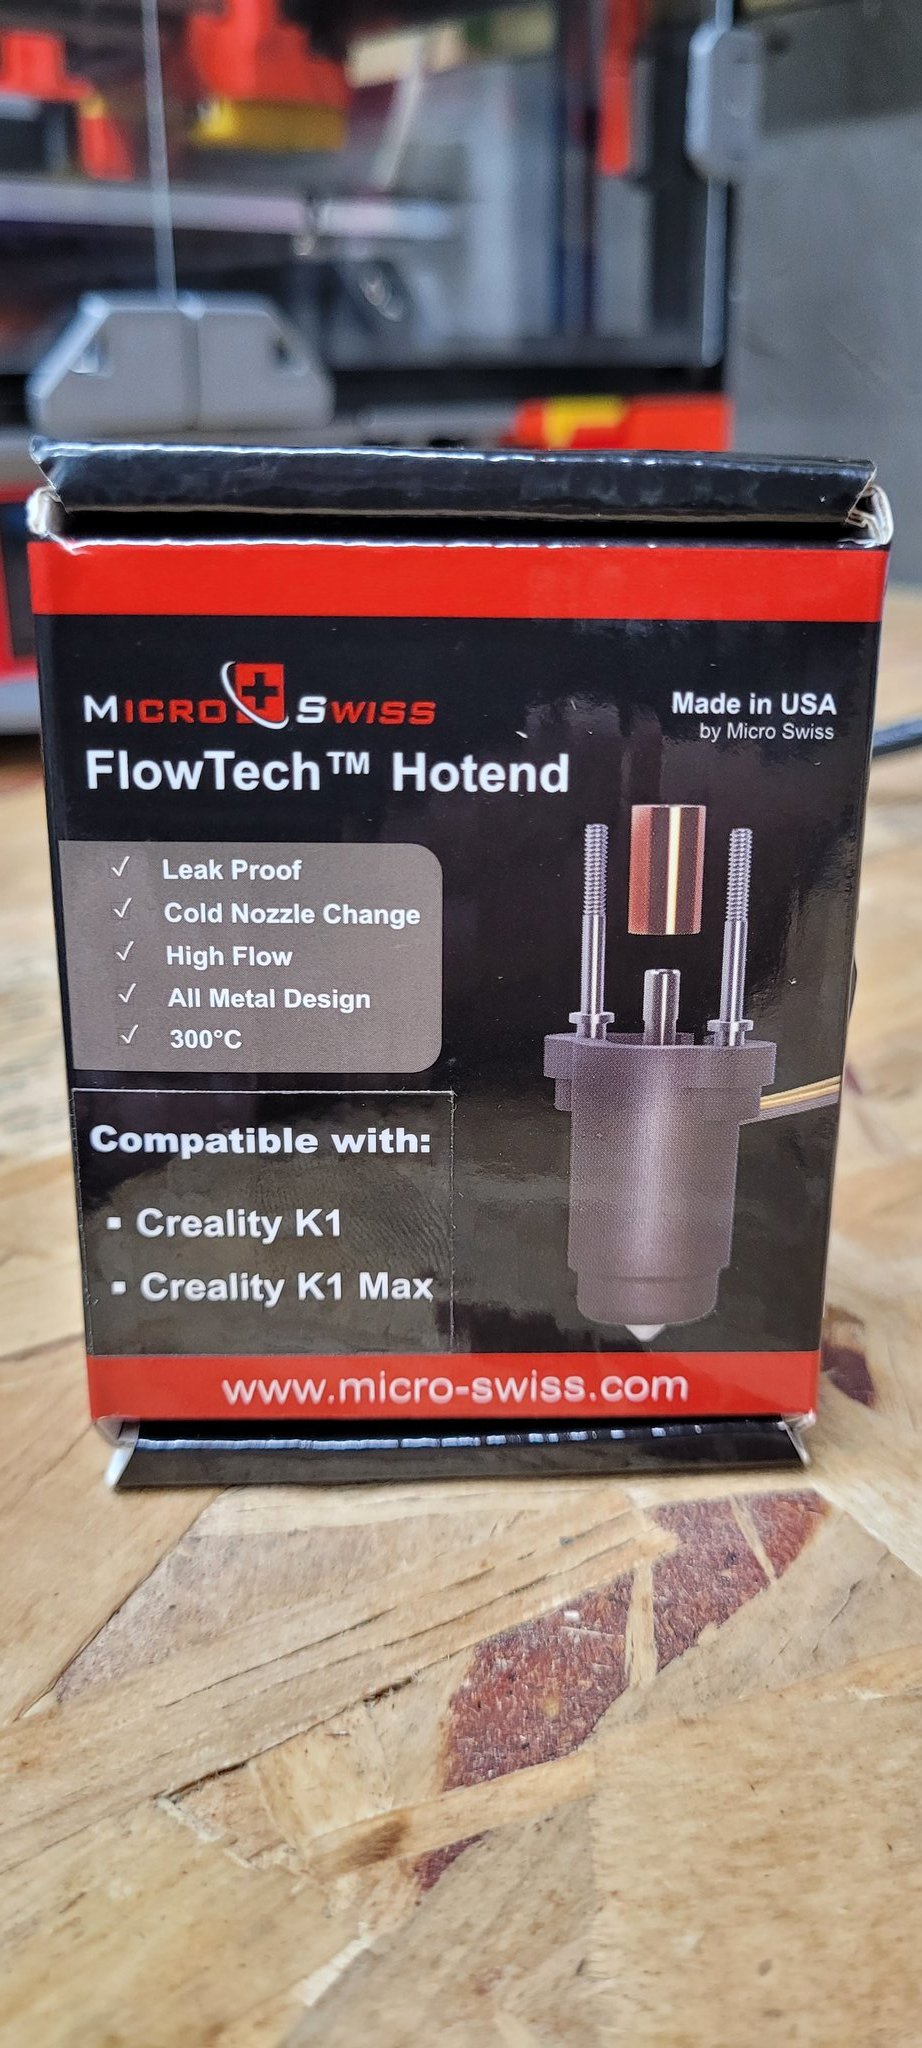 Micro Swiss FlowTech Hotend for Creality K1 / K1 Max